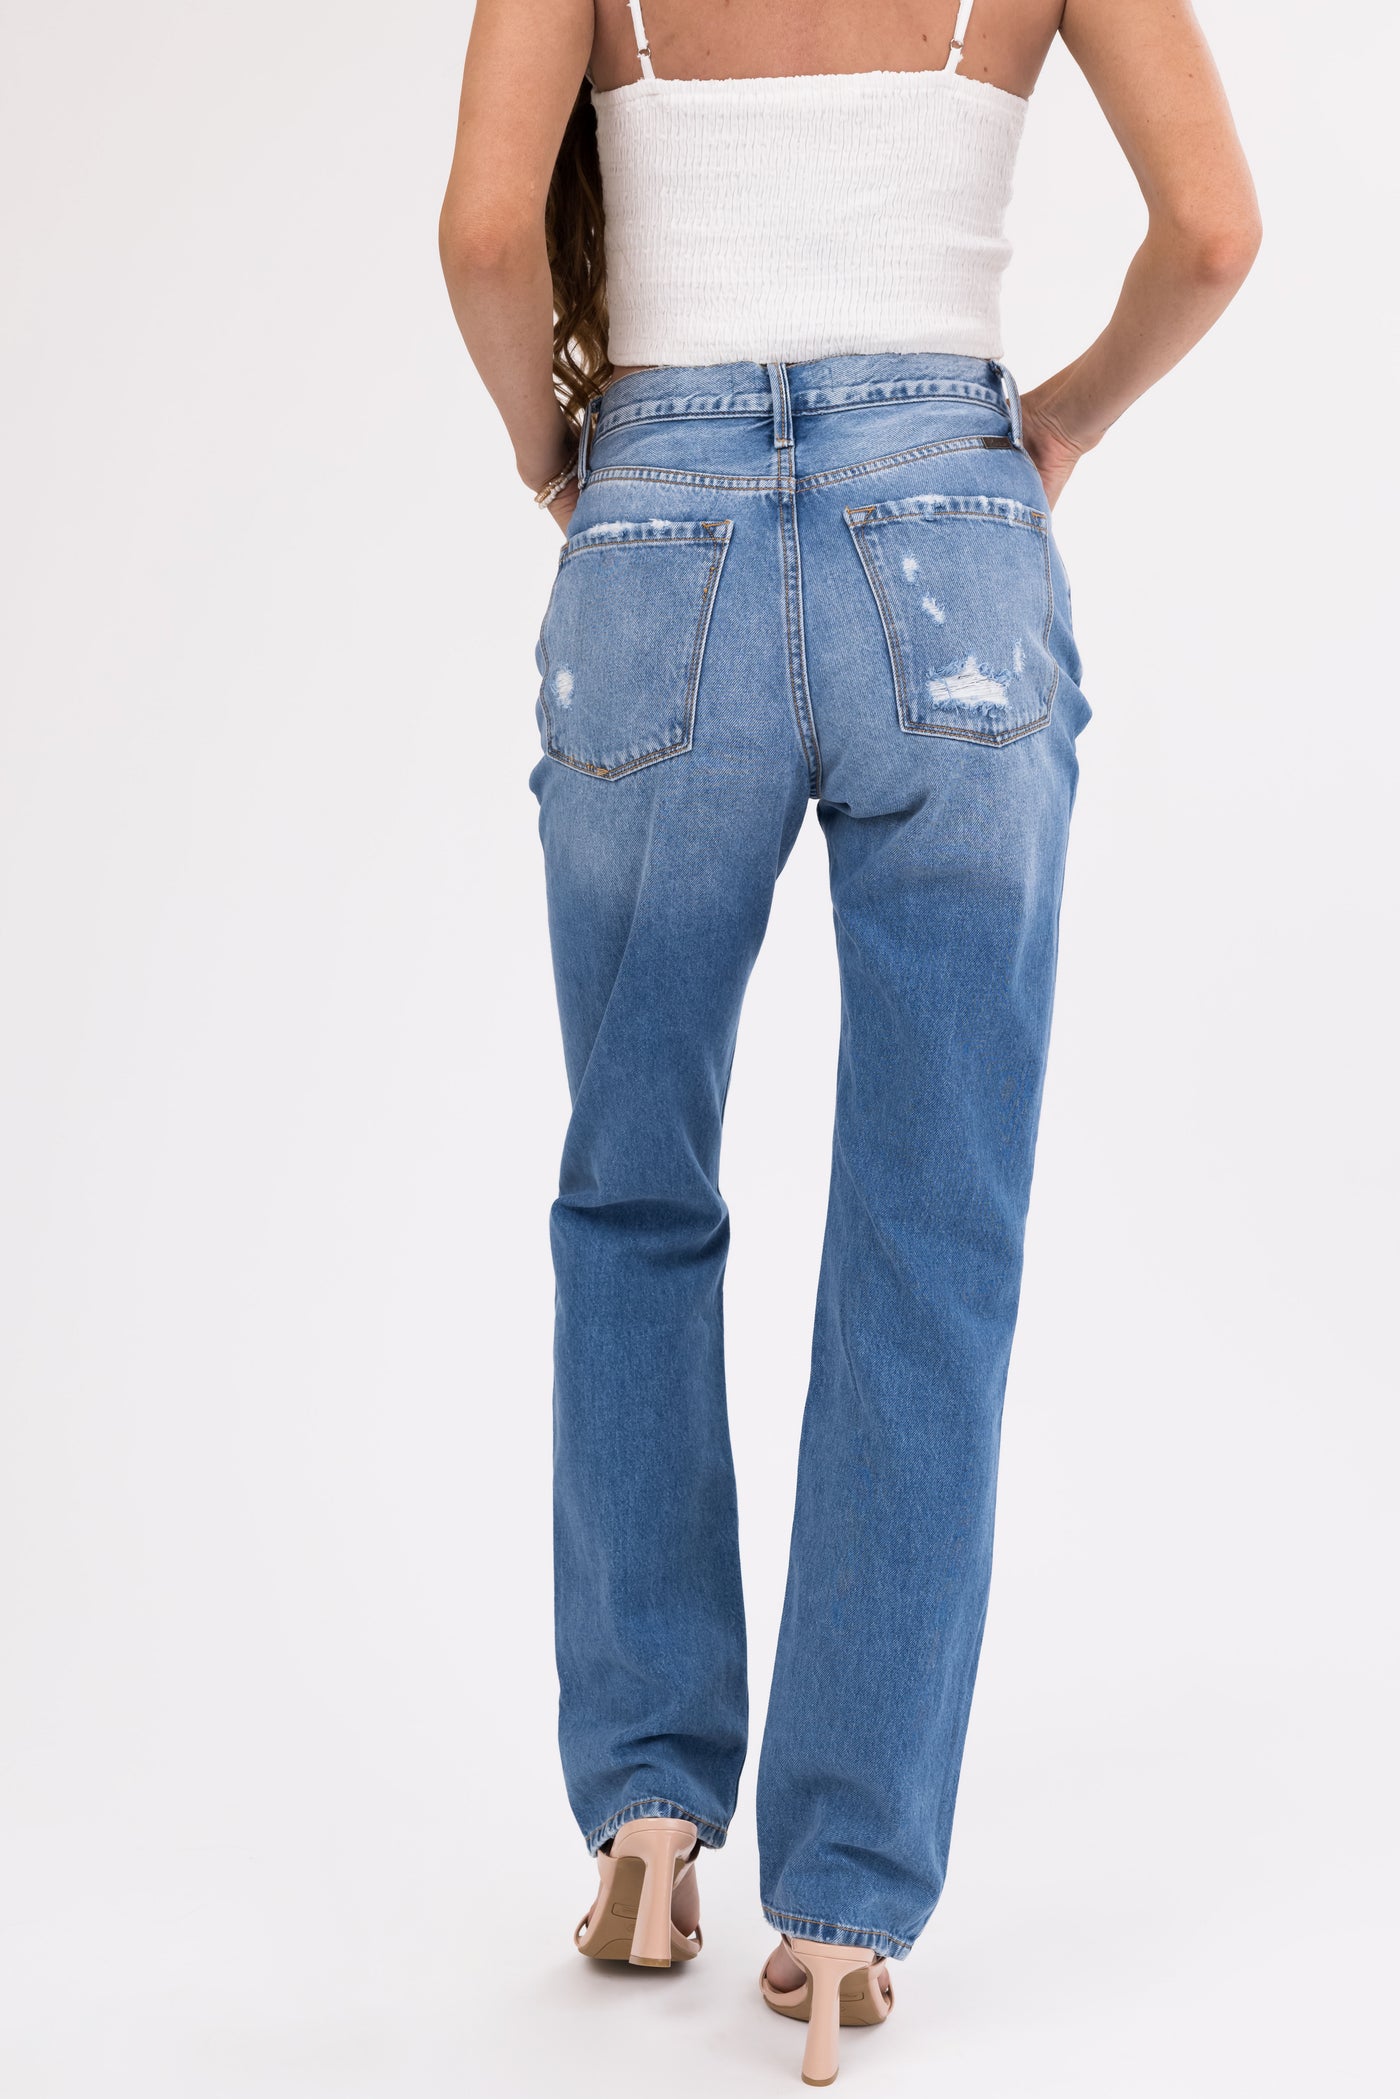 KanCan Medium Wash Distressed High Rise Straight Jeans